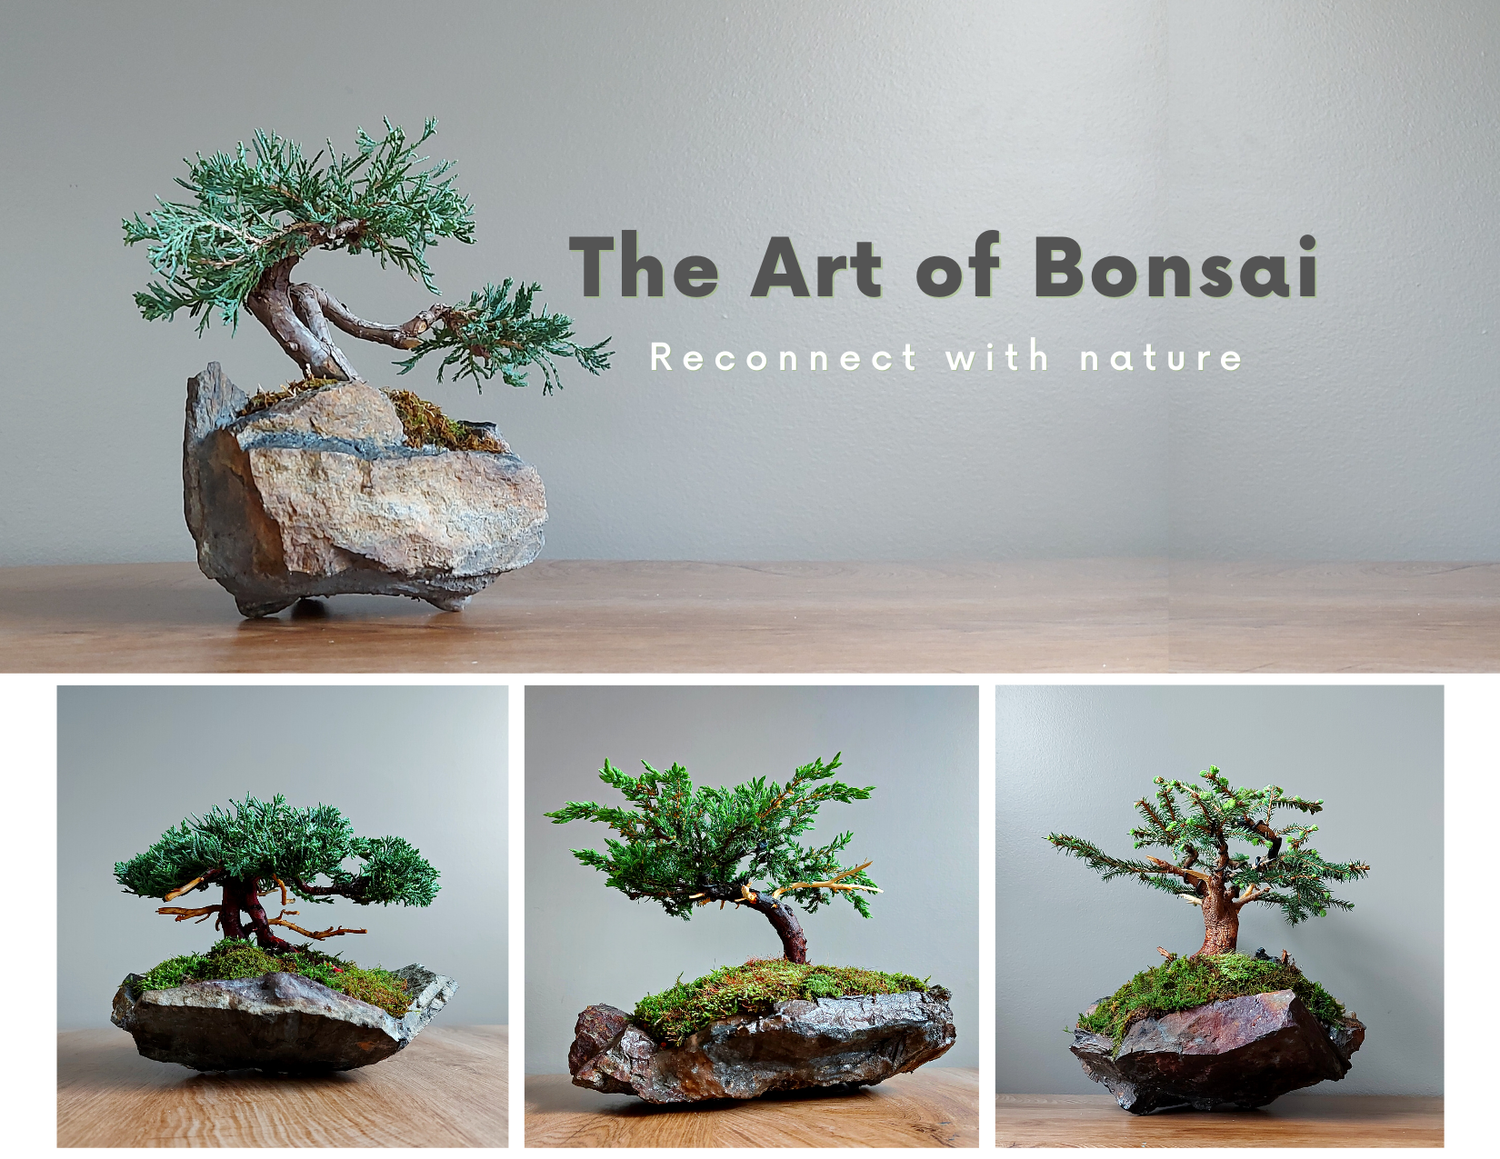 The Art of Bonsai workshop